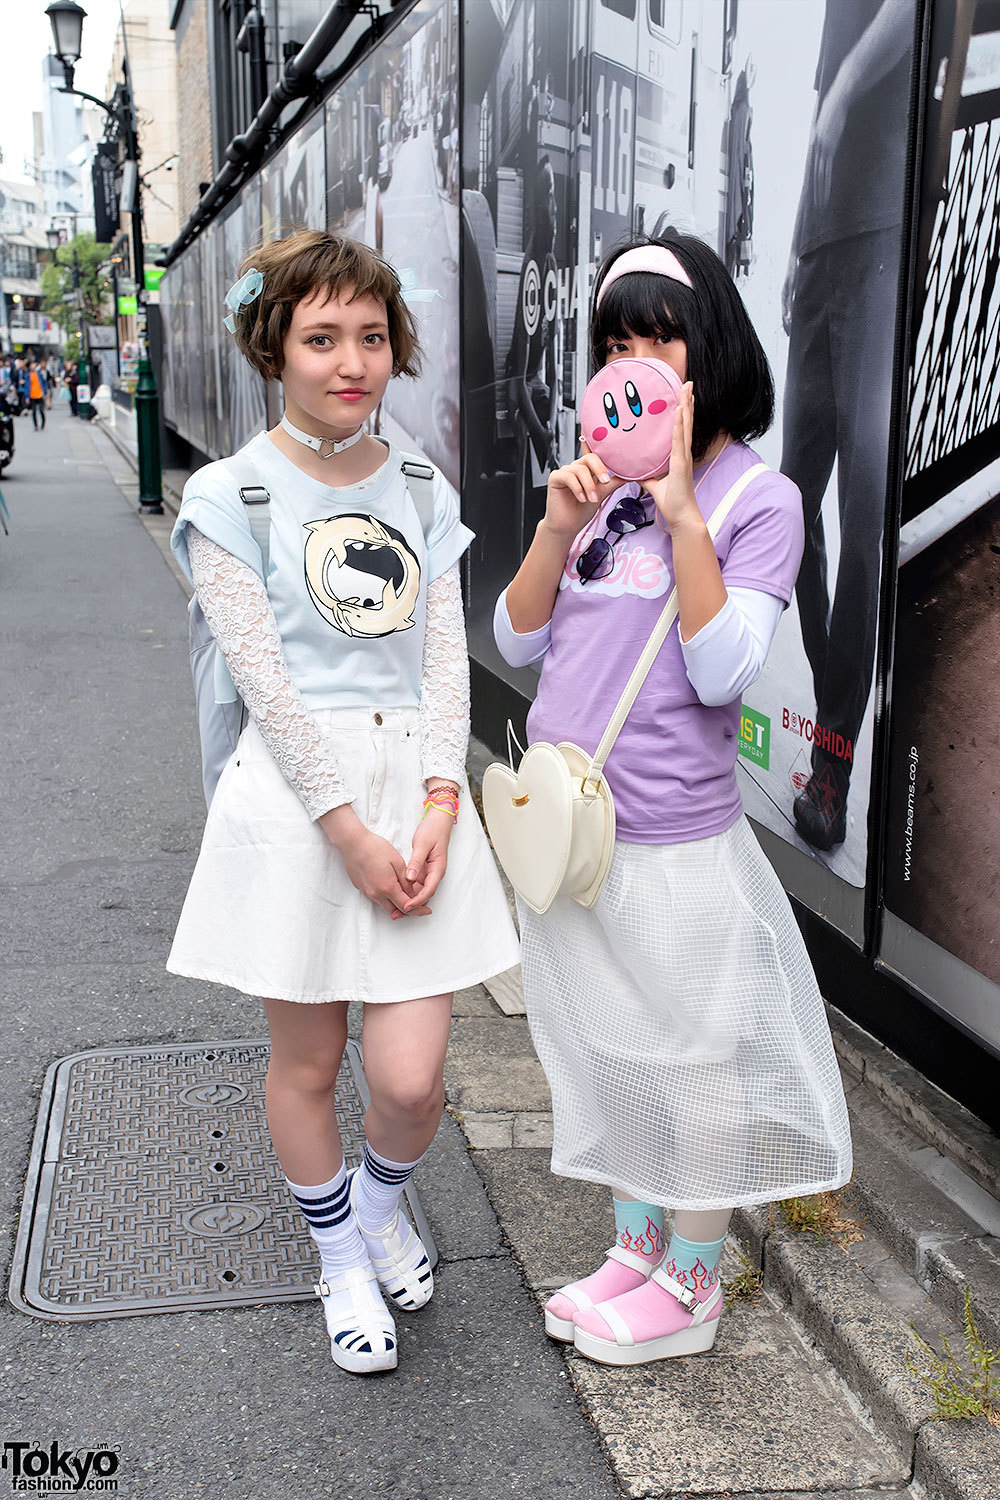 tokyo-fashion:  17-year-old Hana and 15-year-old Nachi on the street in Harajuku.